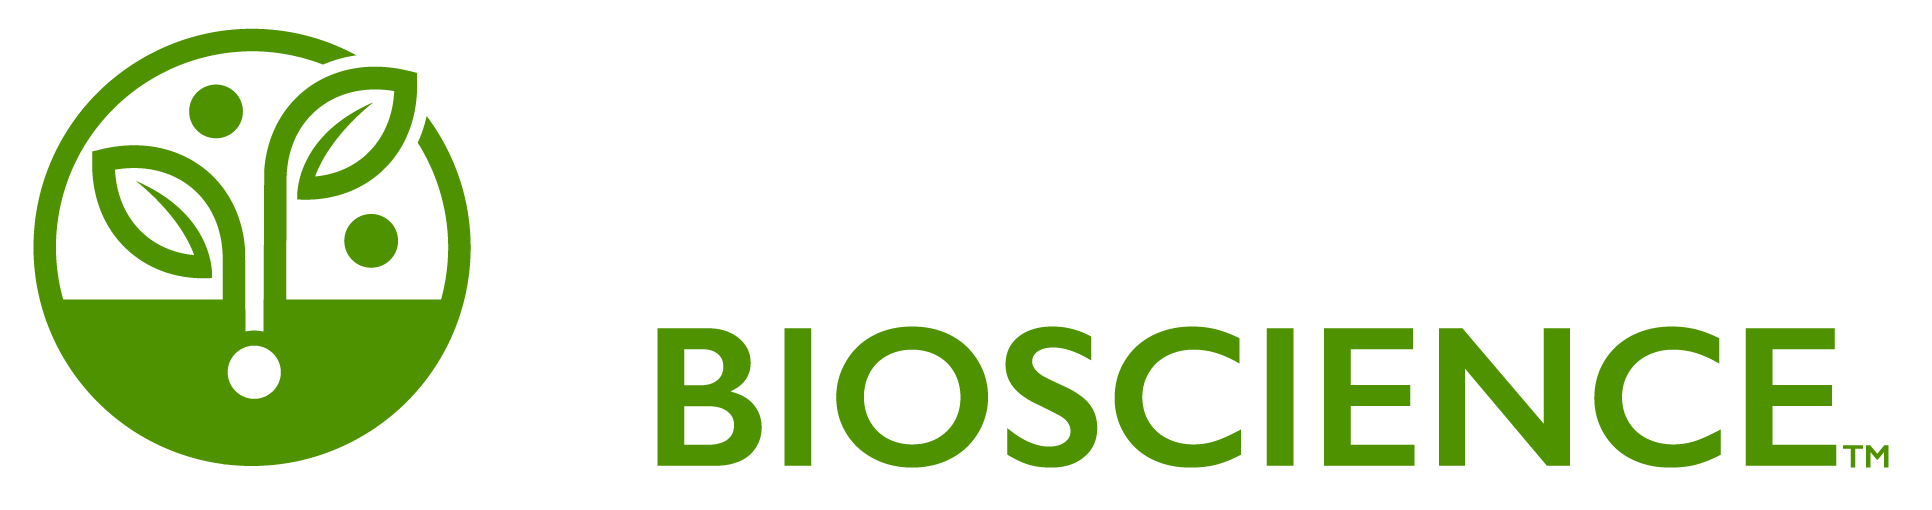 Jord BioScience